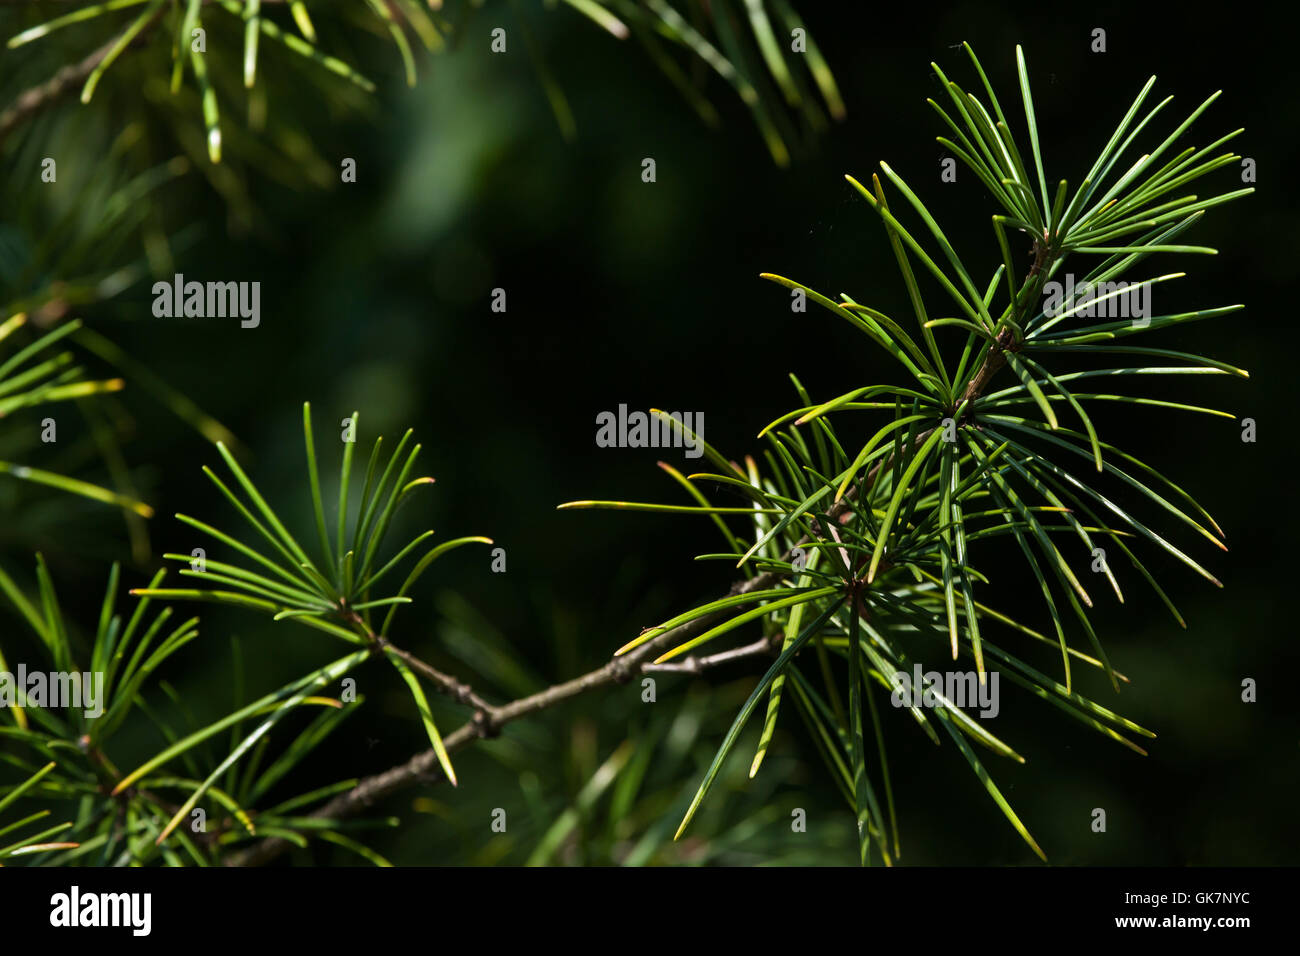 Japanese umbrella pine (Sciadopitys verticillata), also known as the koyamaki. Conifer plant. Stock Photo